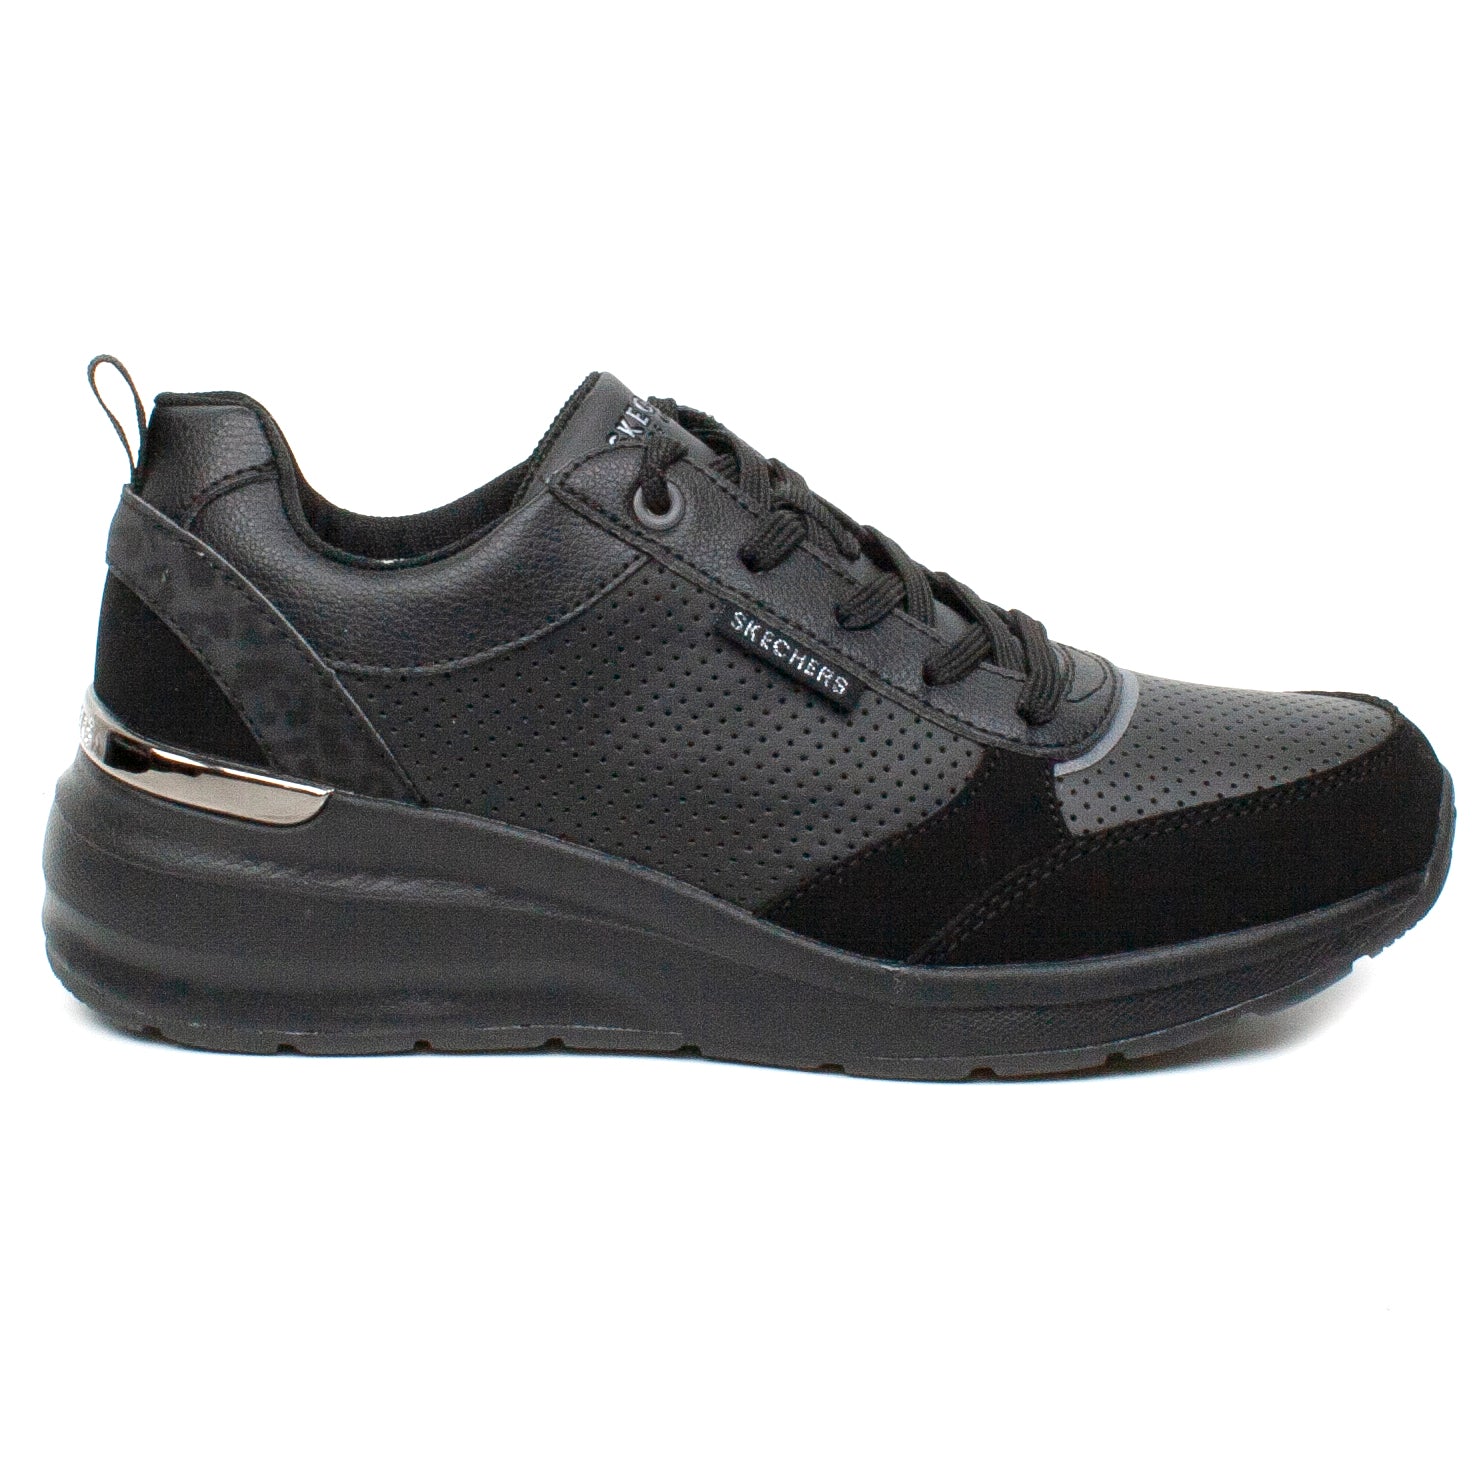 Skechers pantofi dama sport 155616 negru ID2617-NG